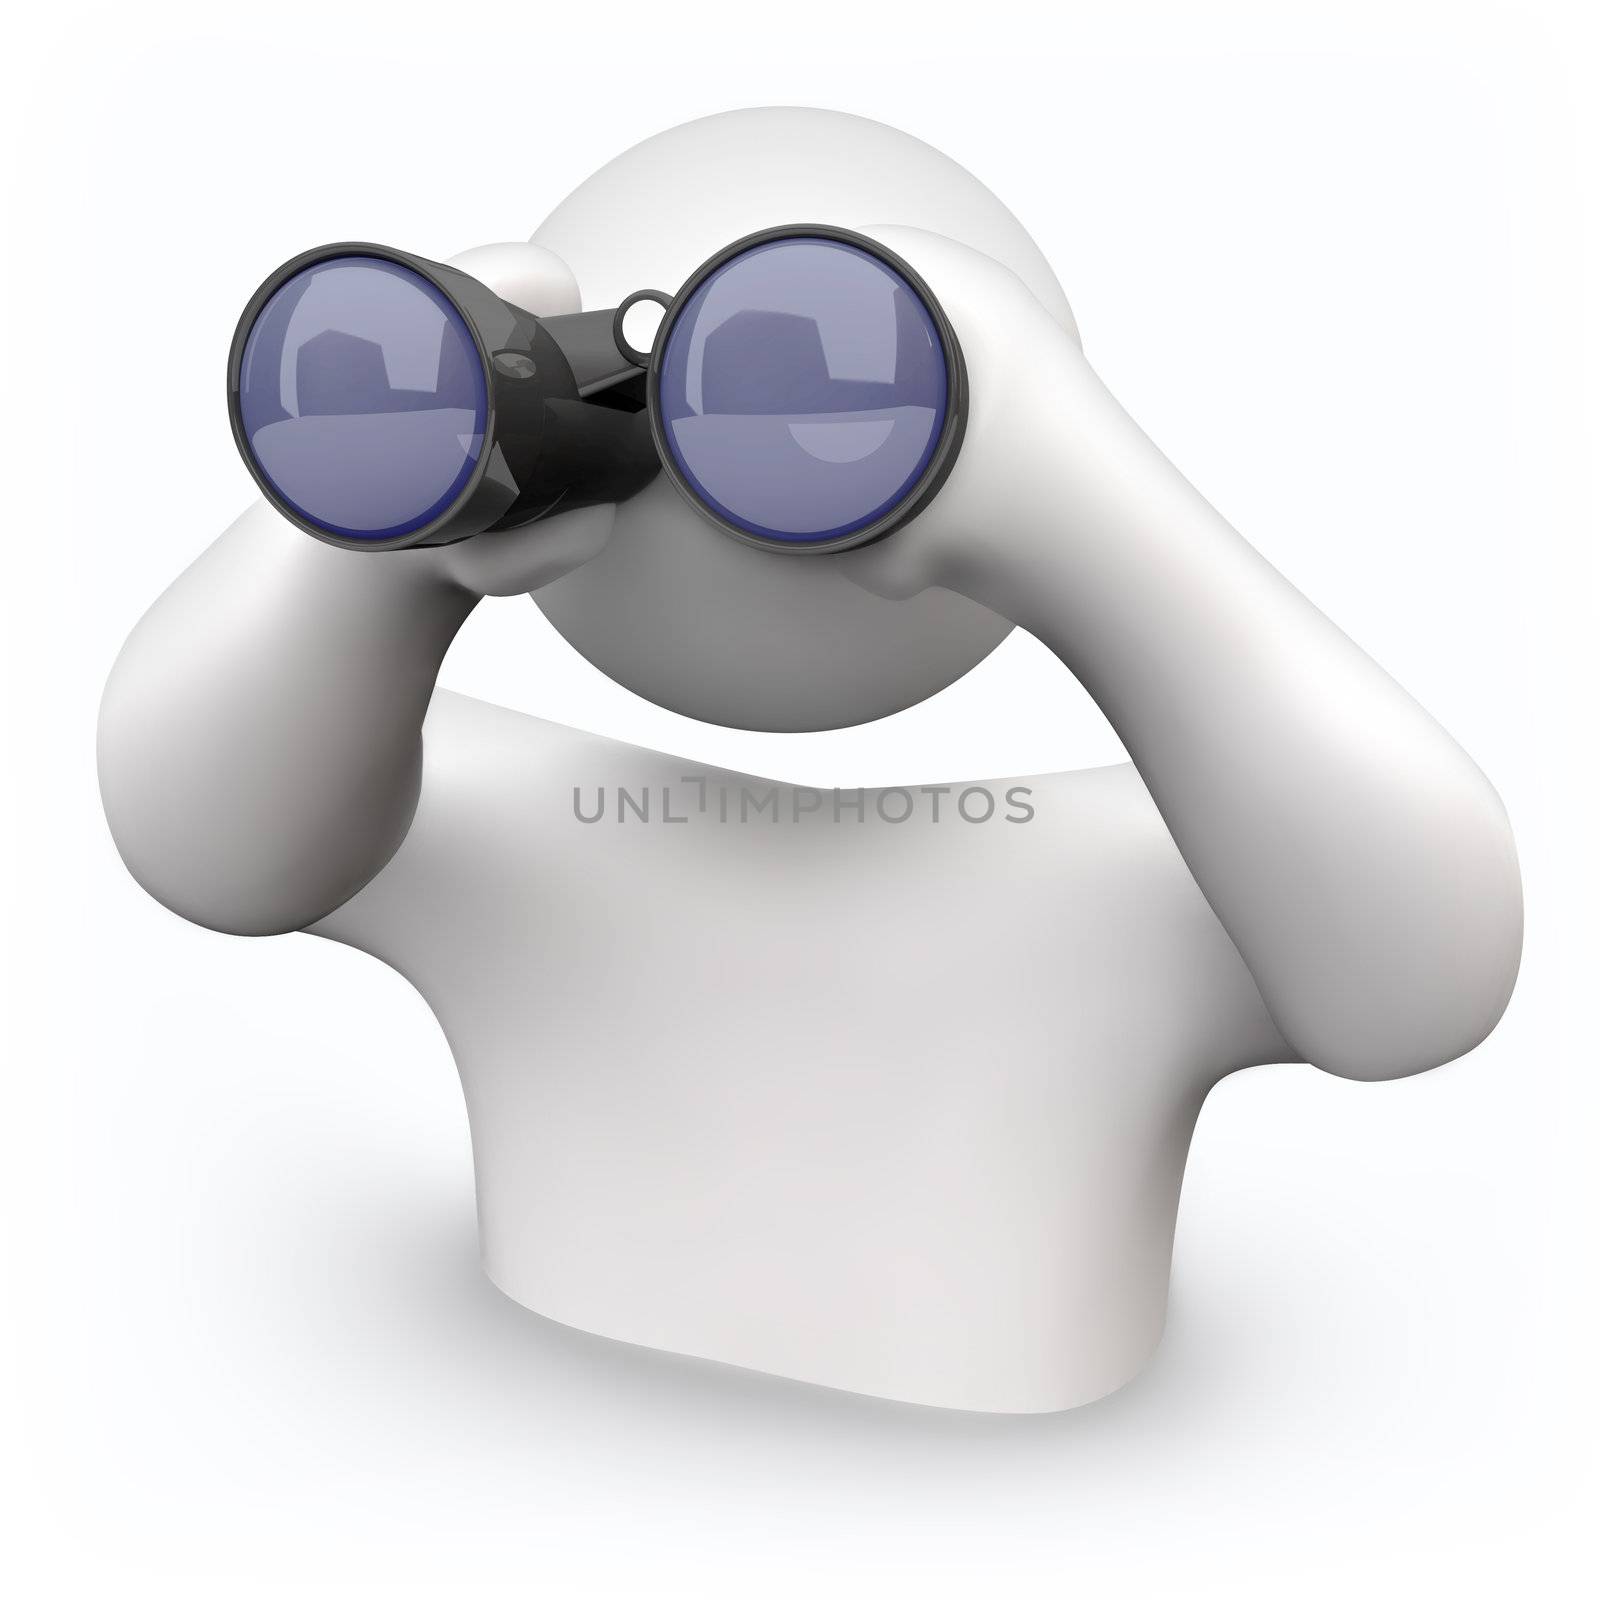 Binoculars - Looking for Help by iQoncept